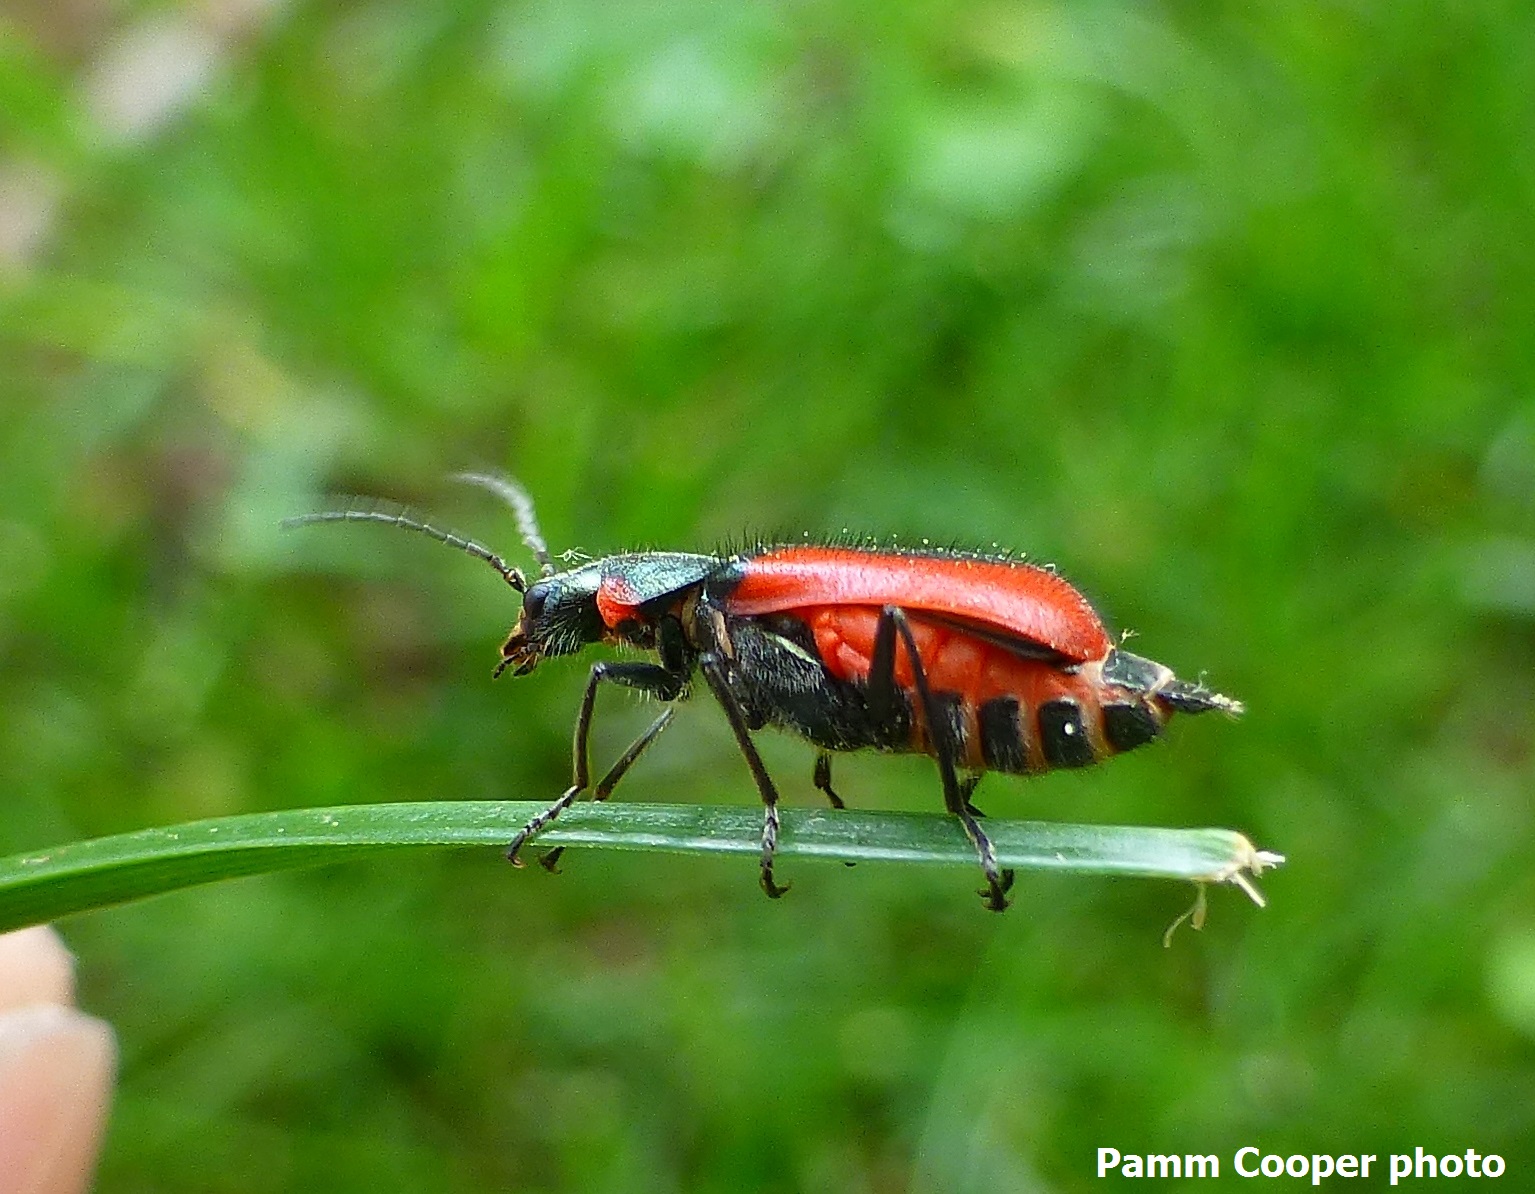 scarlet-malachite-beetle-front-yard-5-14-16-pamm-cooper-copyright-2016